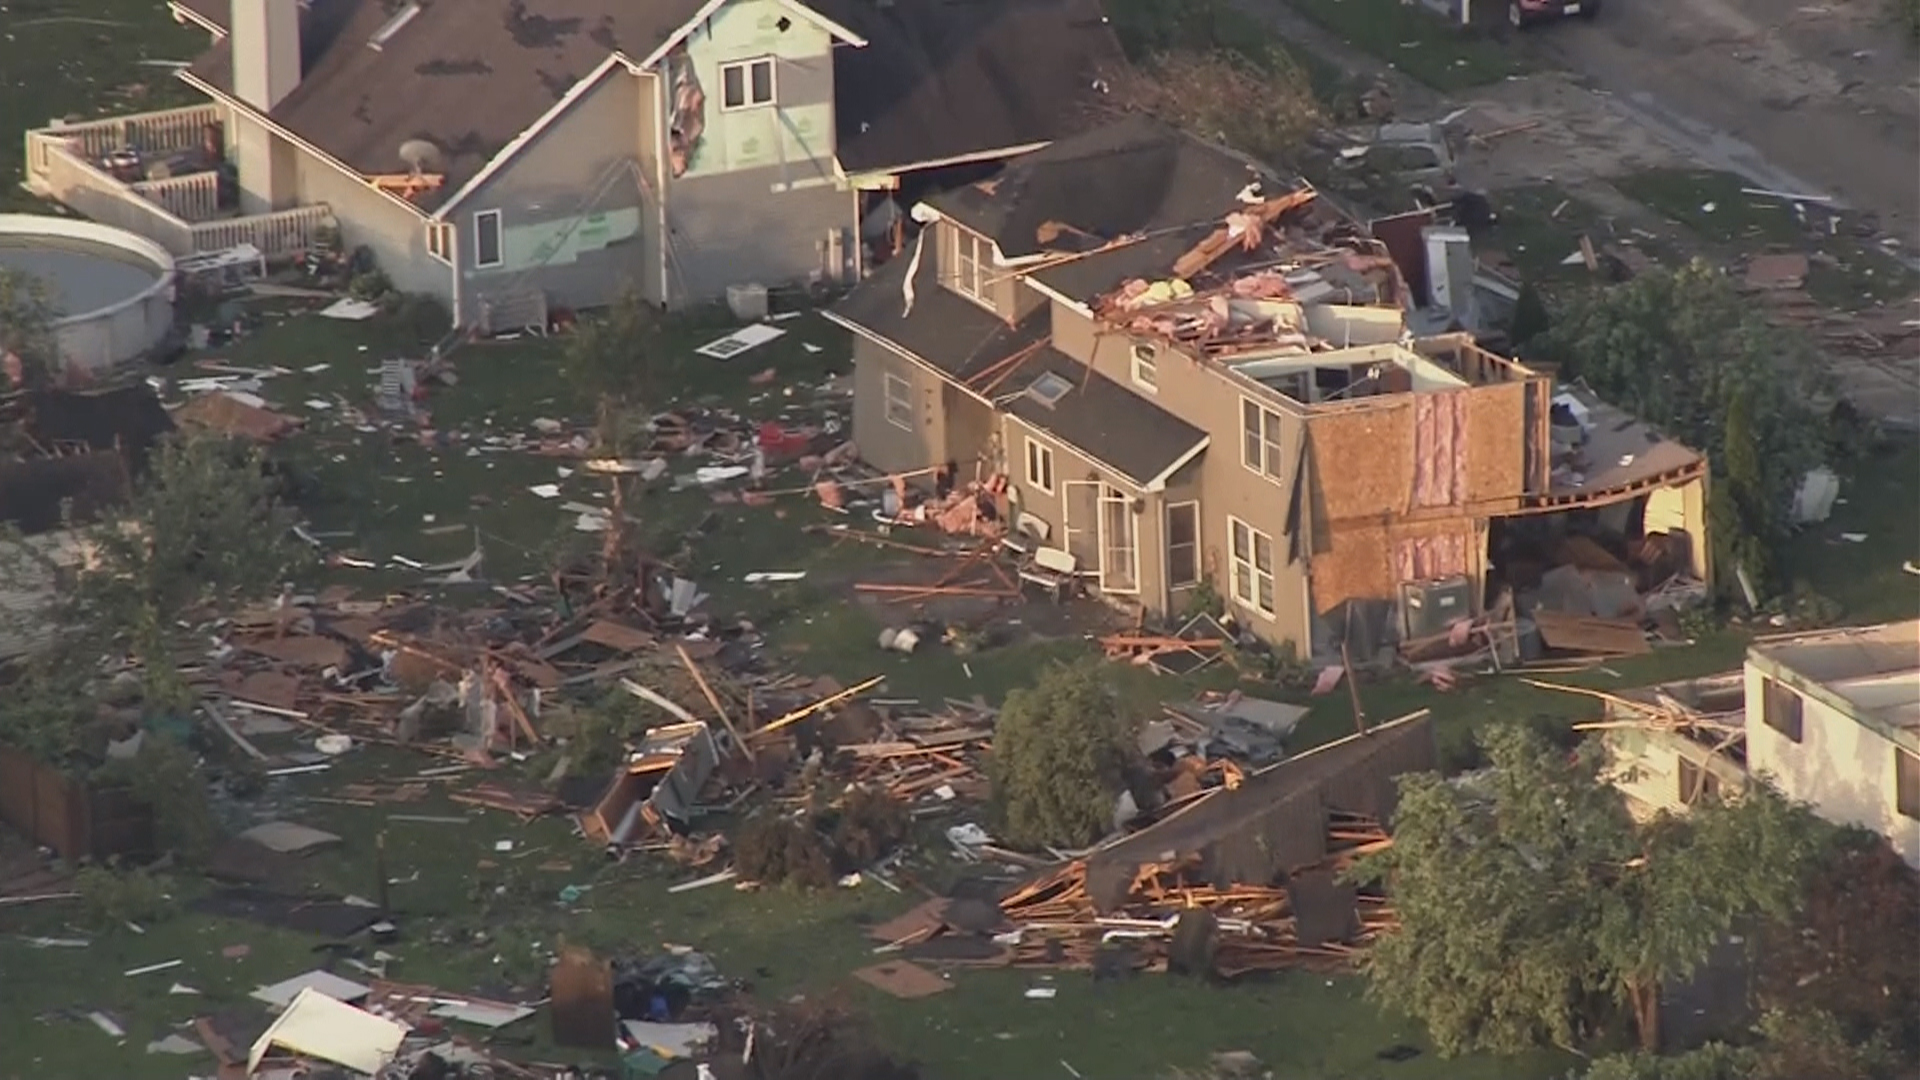 Tornadoes wreak havoc across the Midwest - TODAY.com1920 x 1080